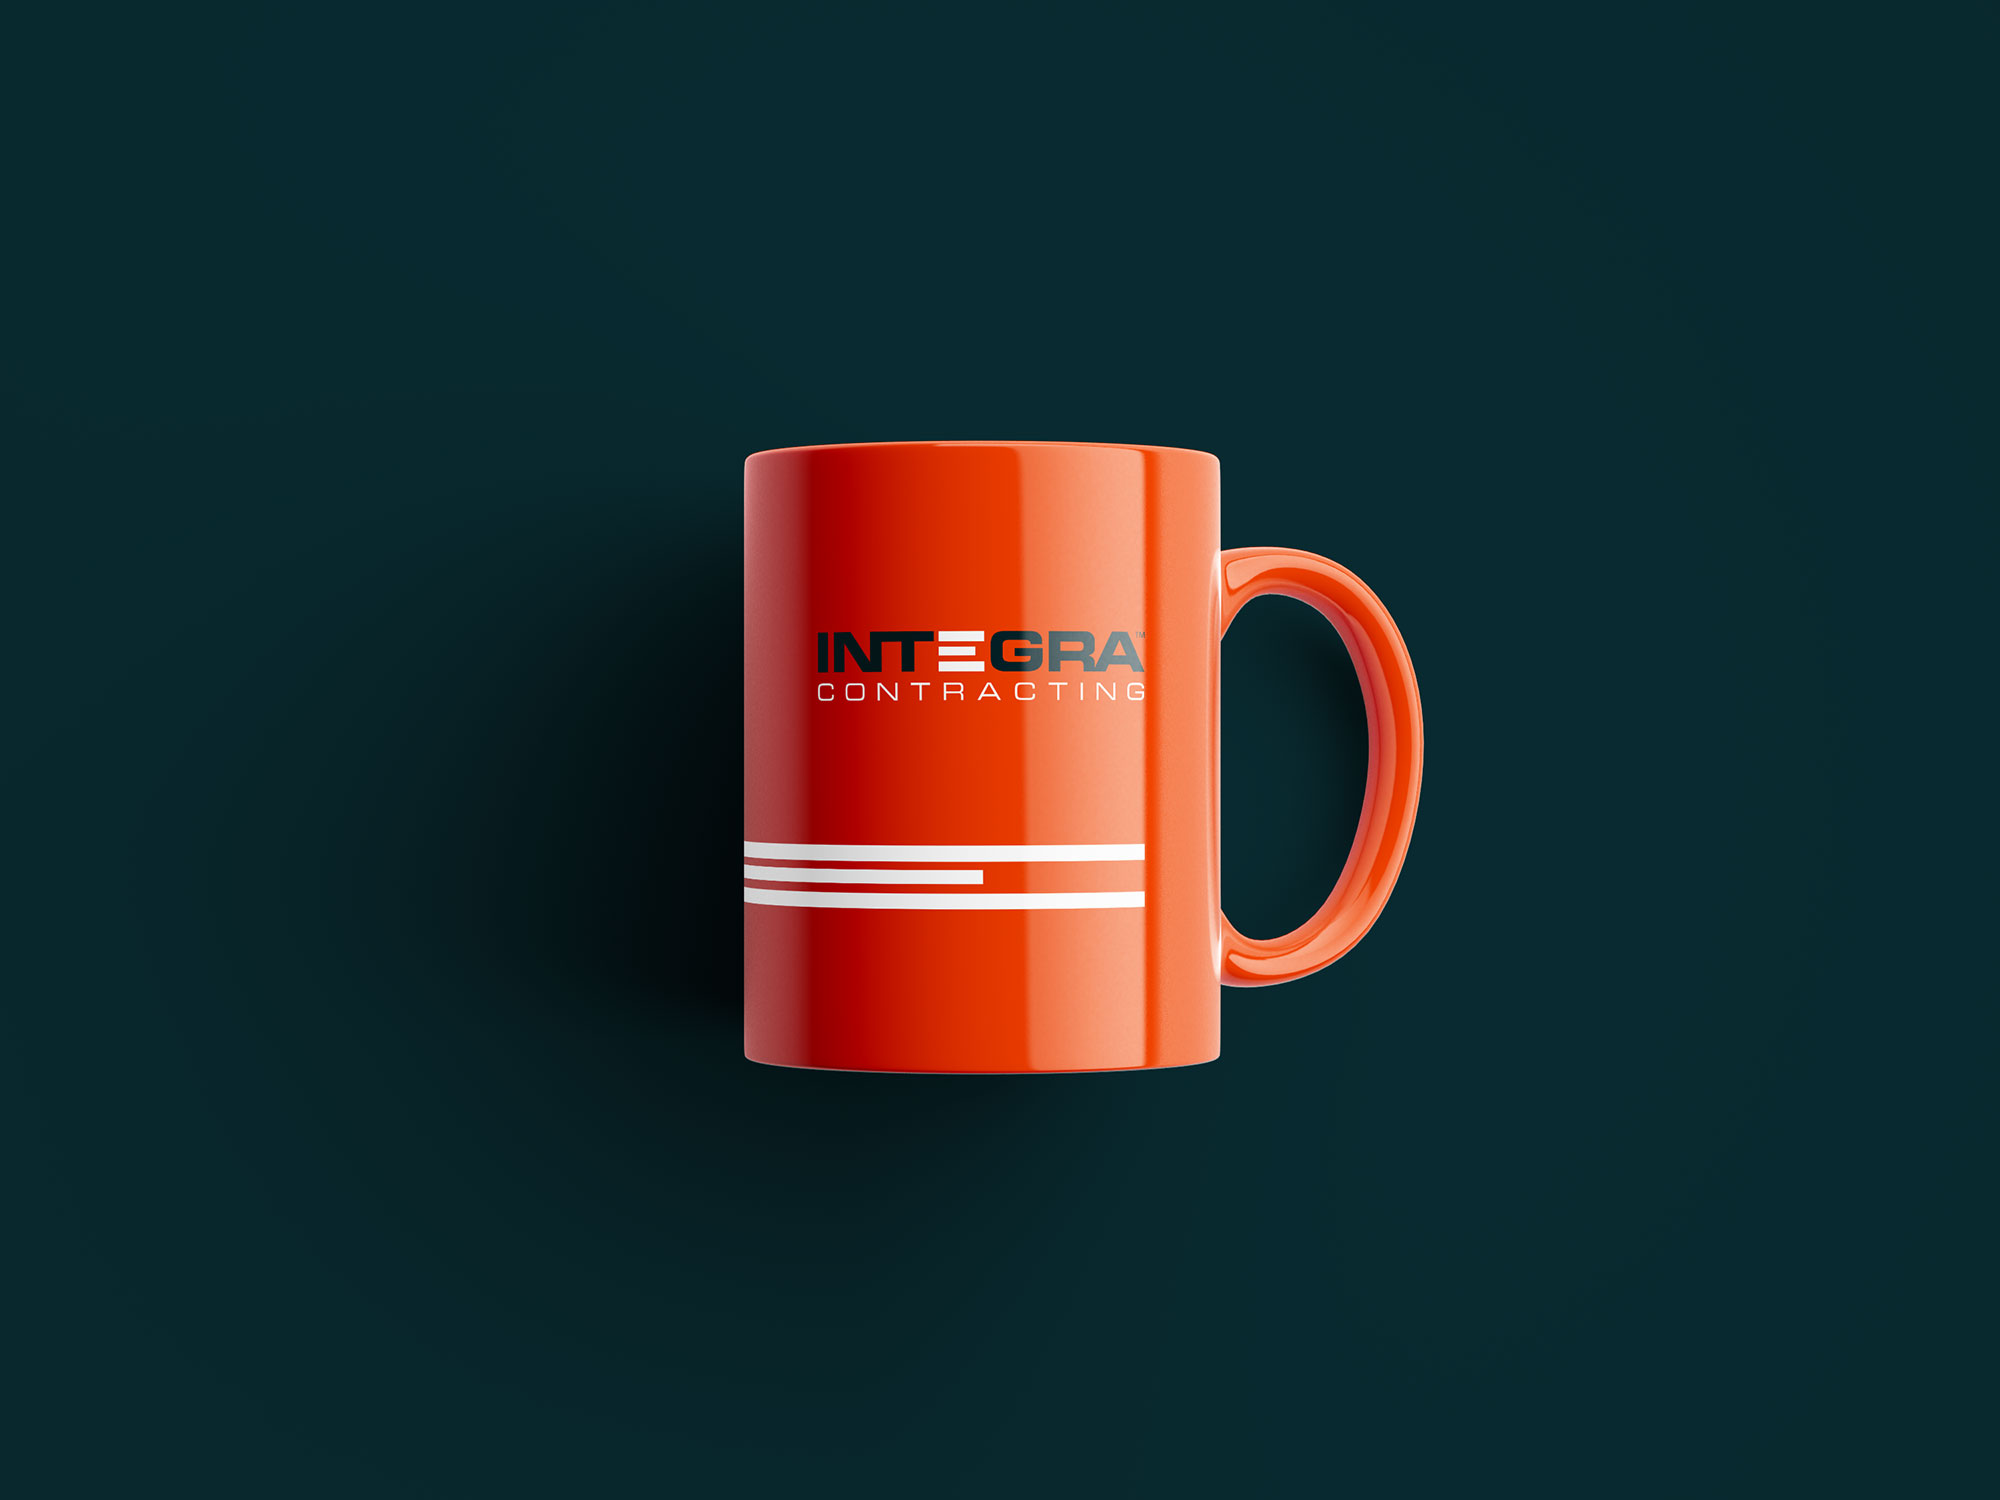 Integra branded mug design